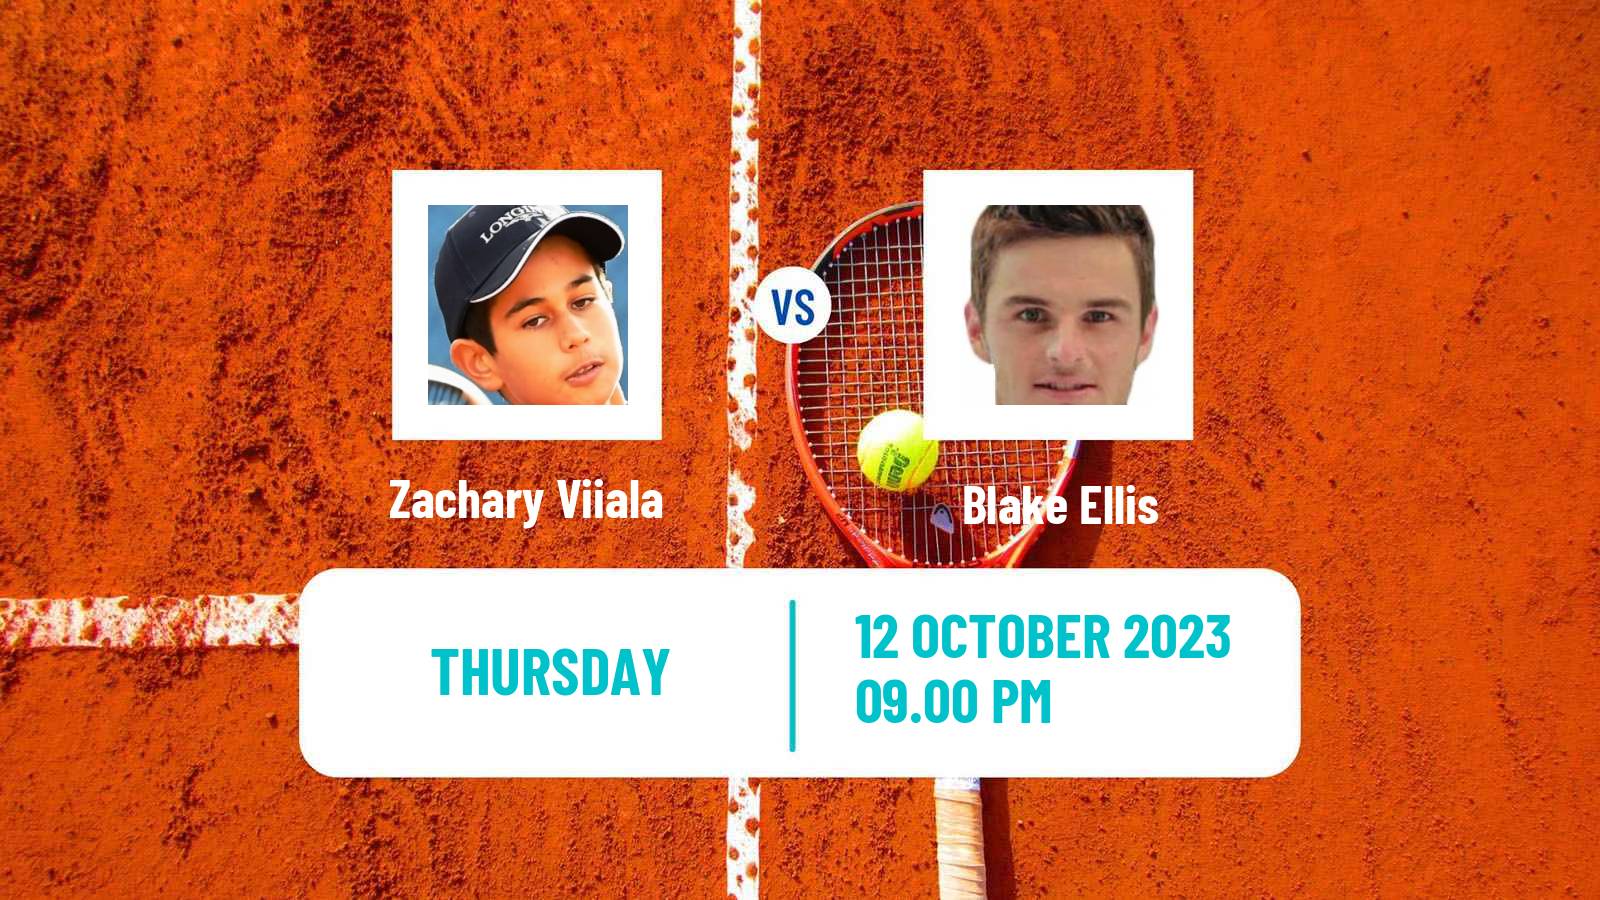 Tennis ITF M25 Cairns 2 Men Zachary Viiala - Blake Ellis